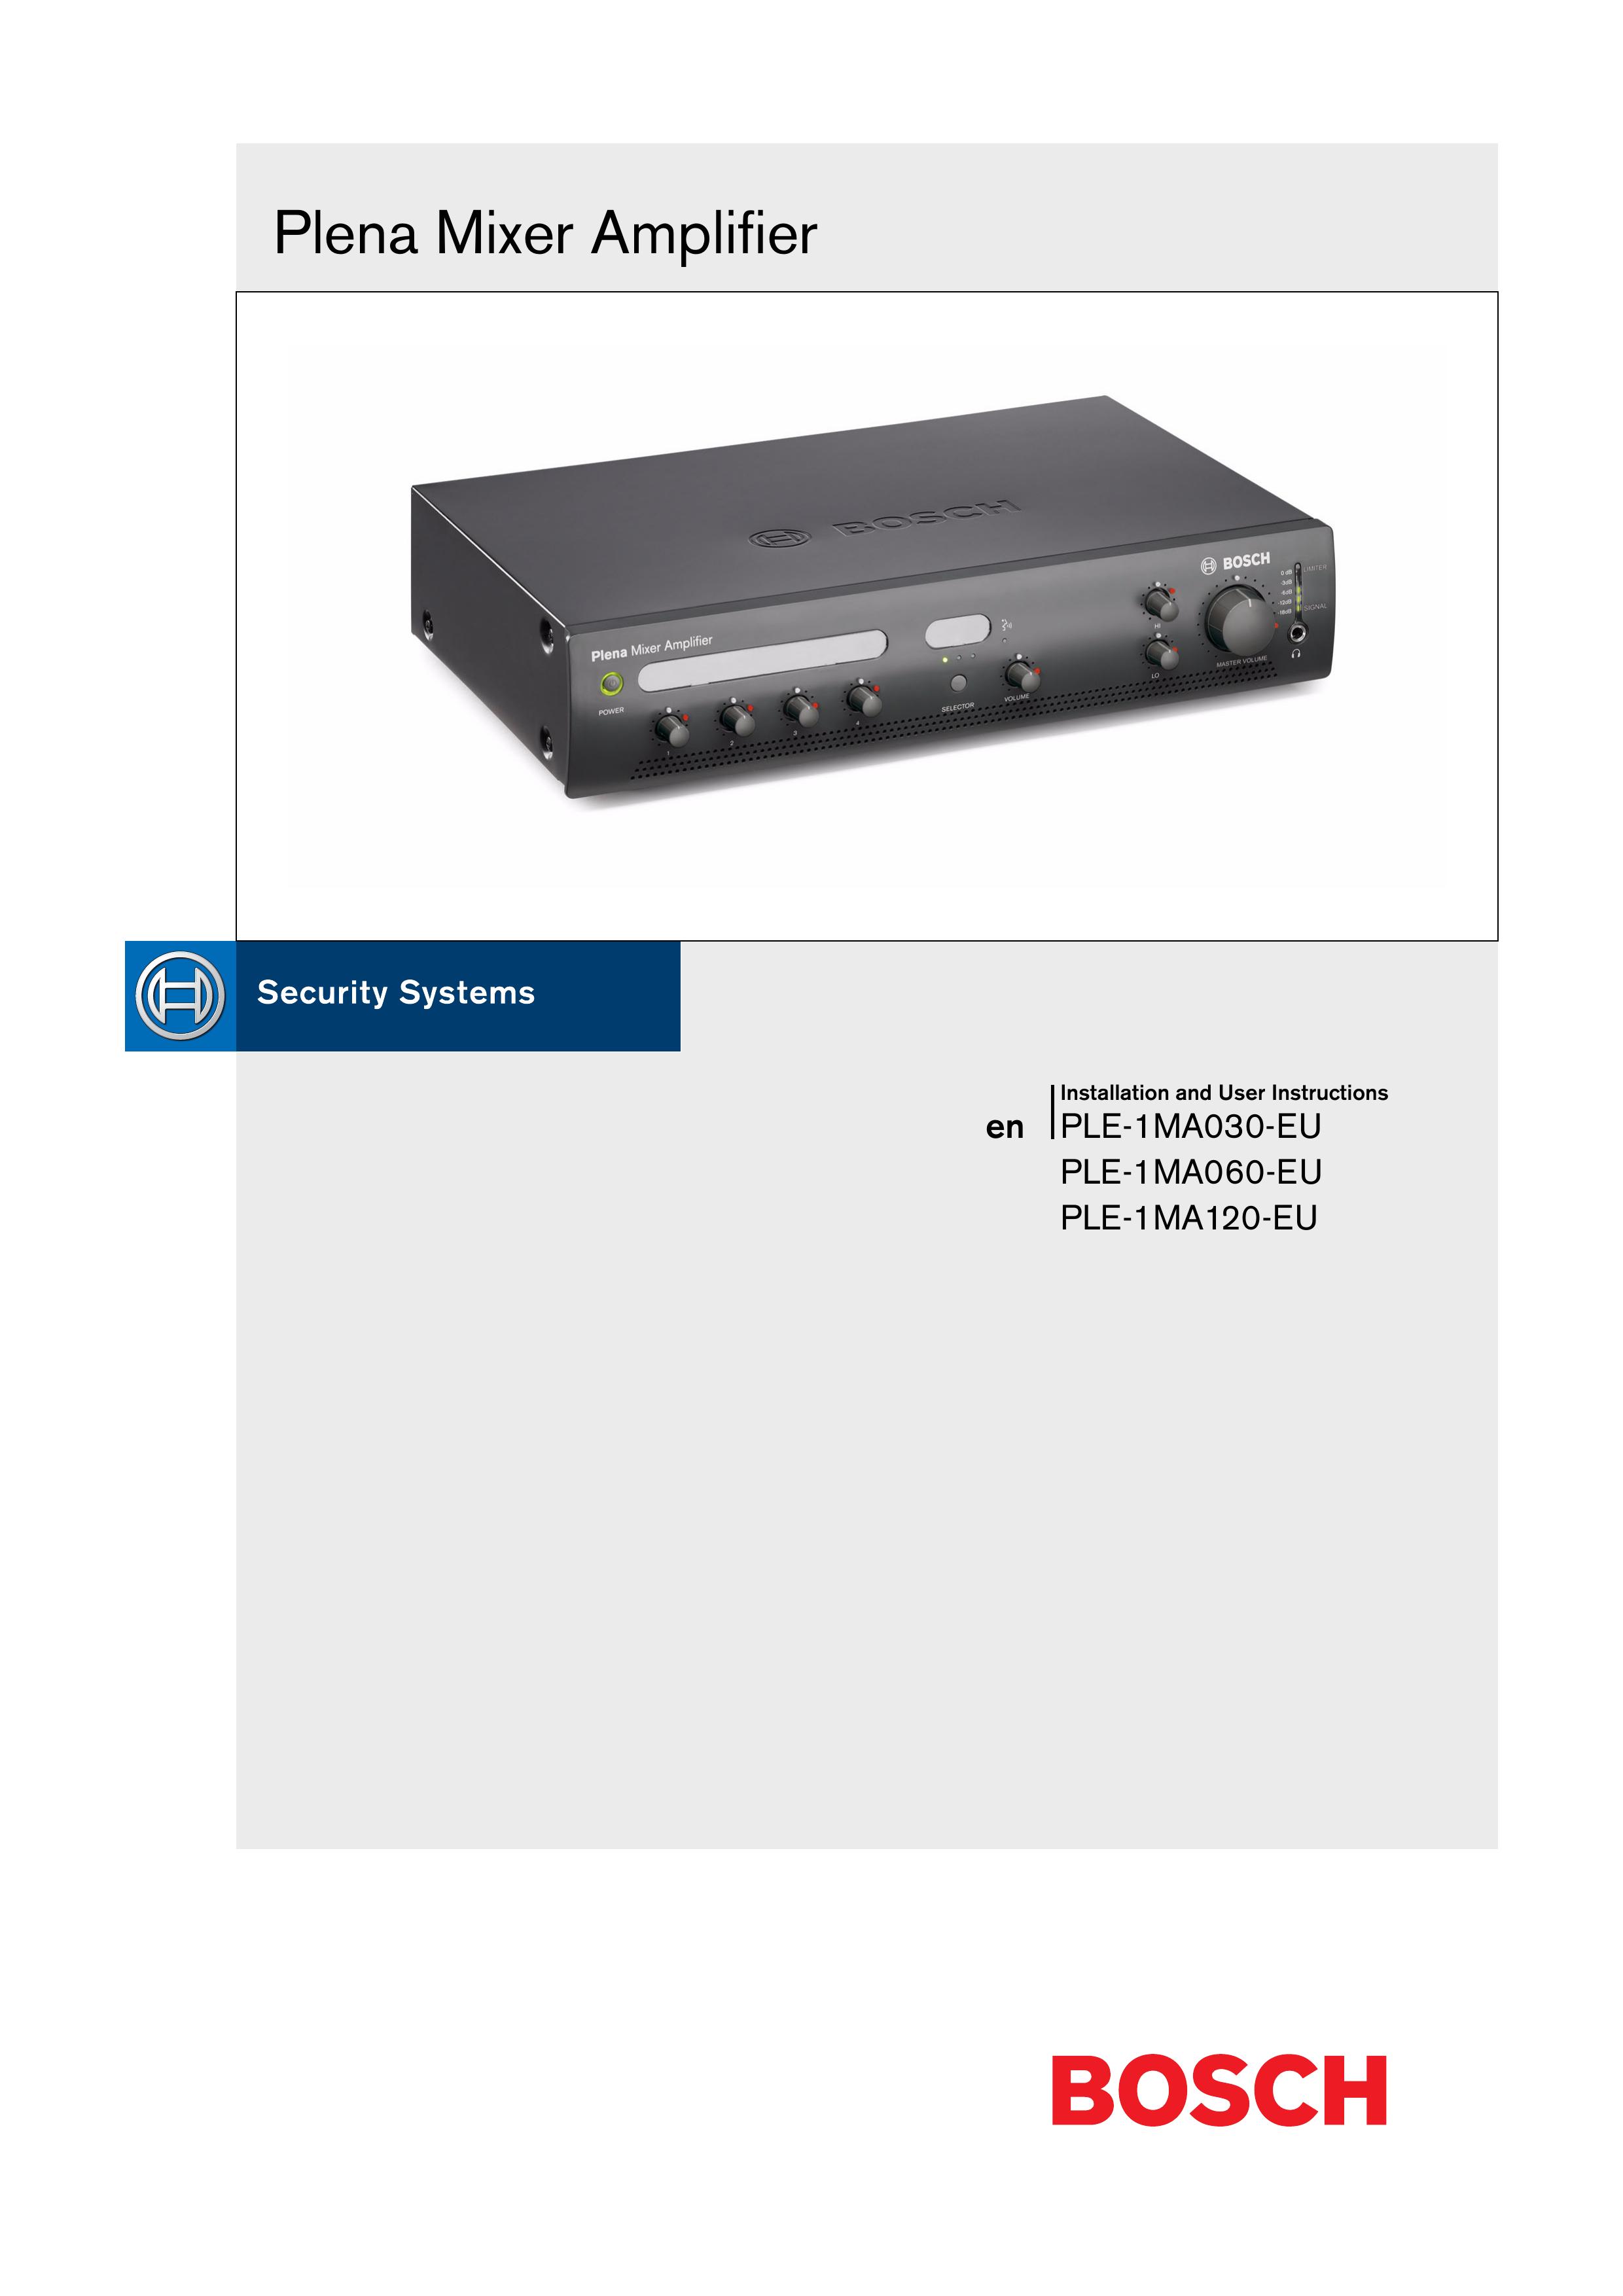 Bosch Appliances PLE-1MA030-EU Music Mixer User Manual